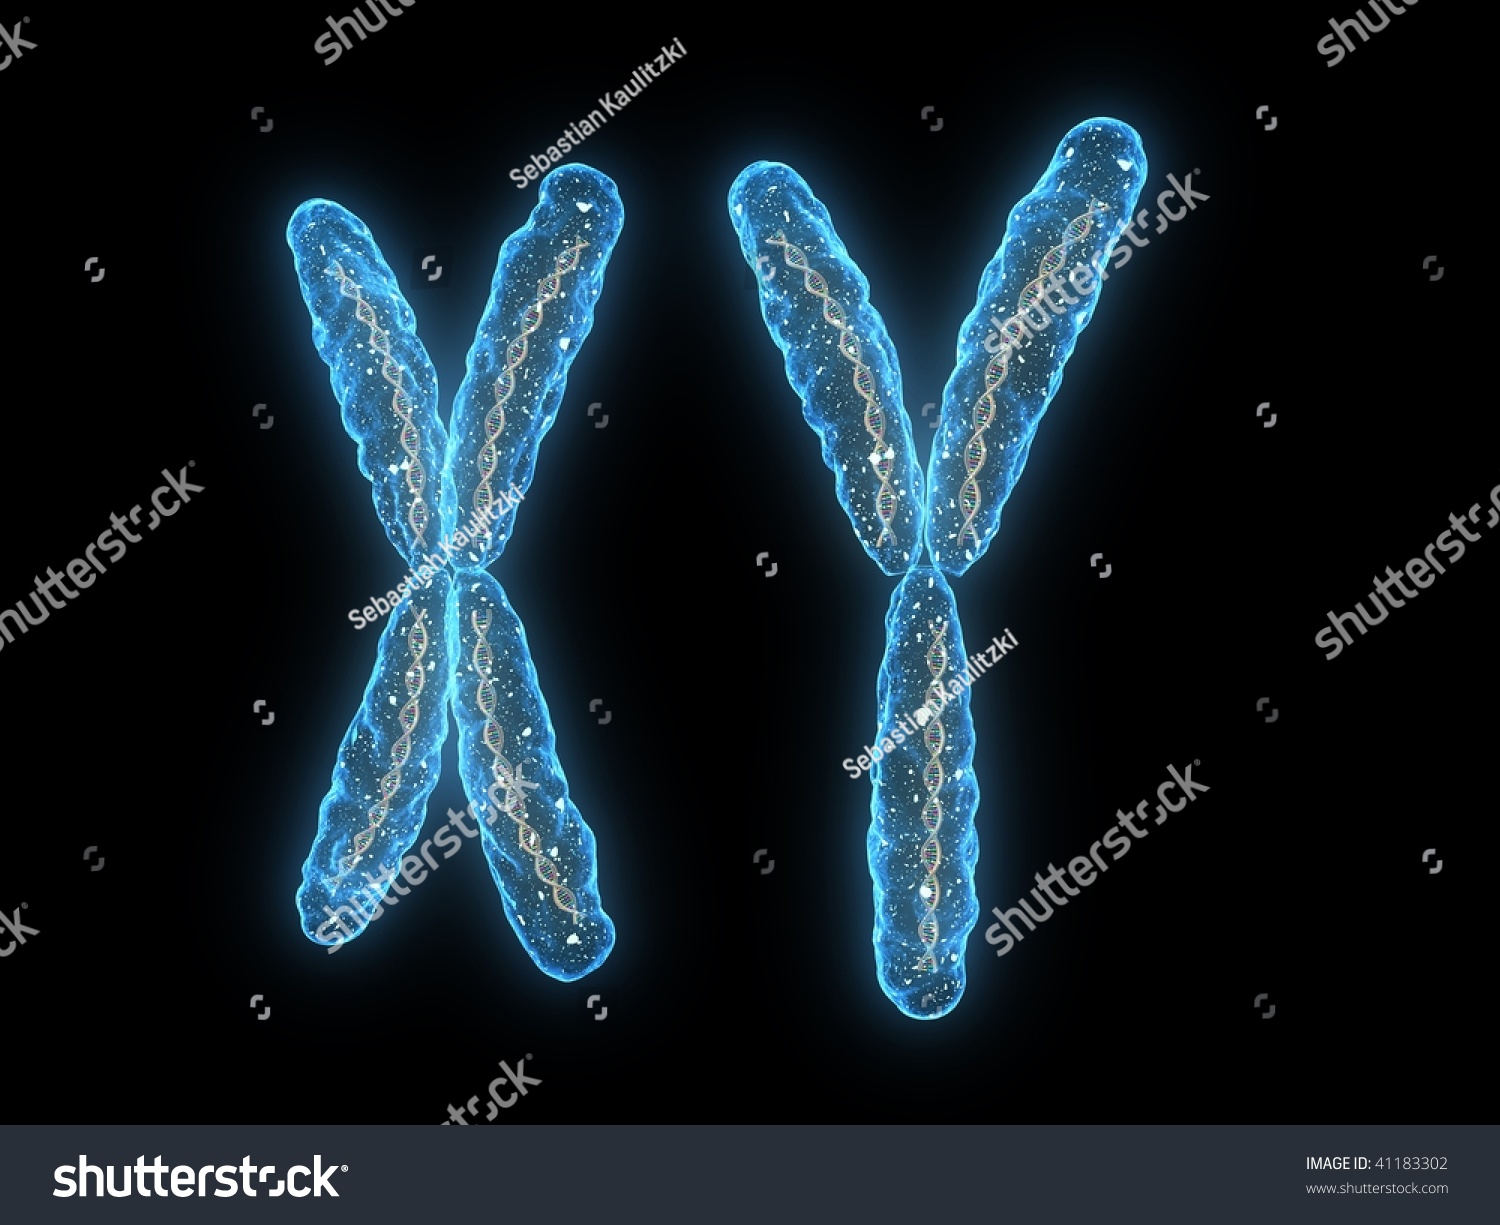 stock-photo-xy-chromosome-41183302.jpg